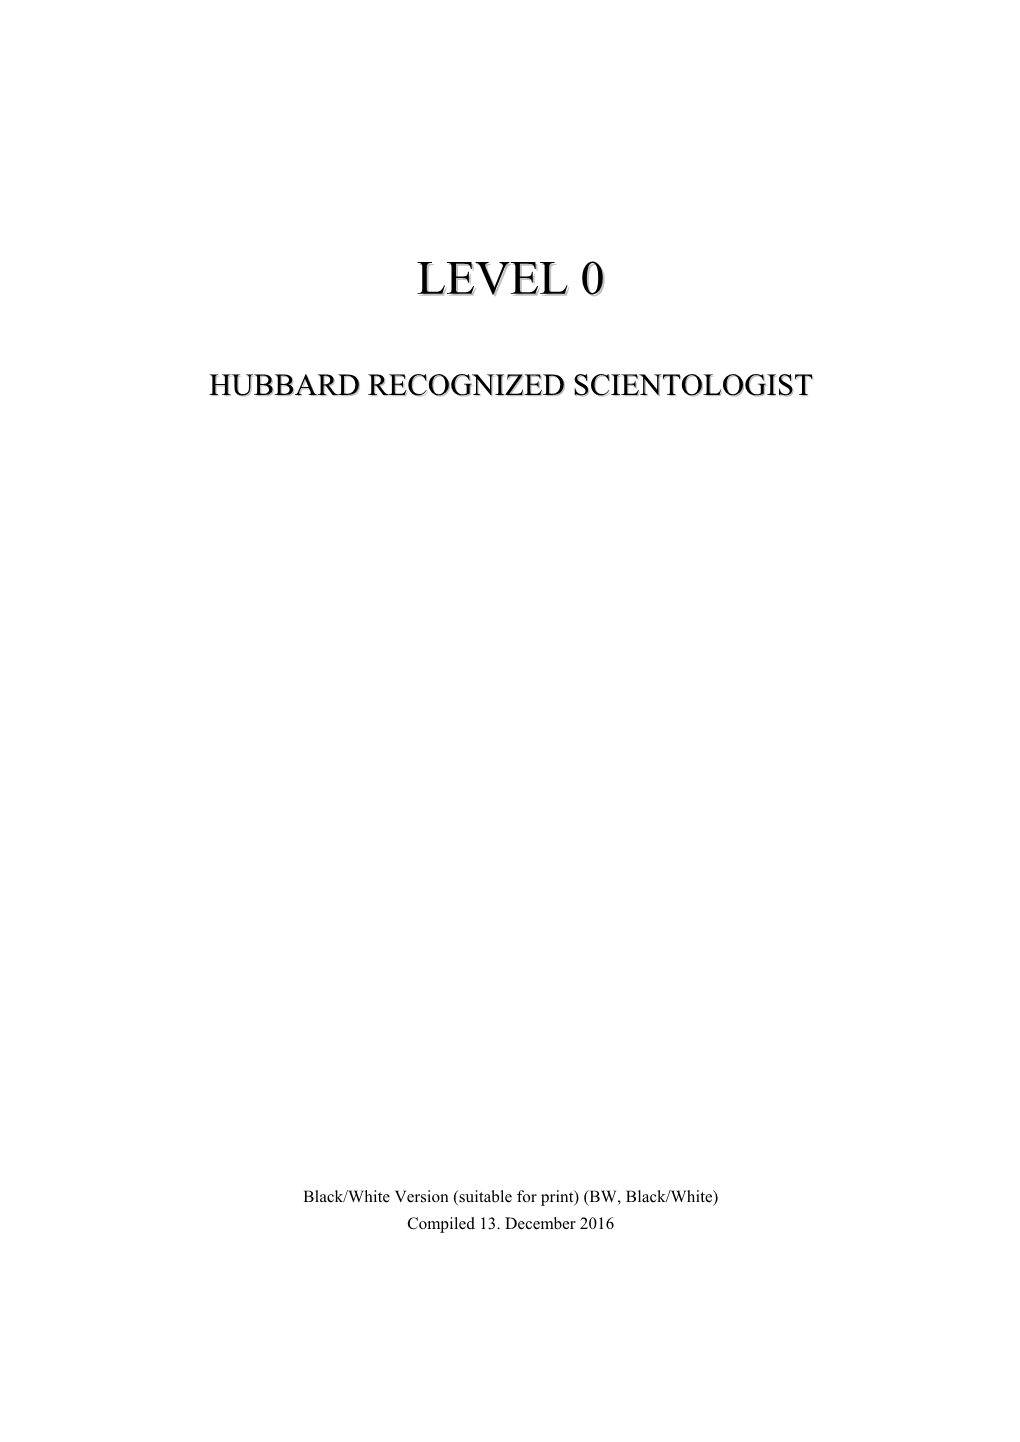 Hubbard Recognized Scientologist